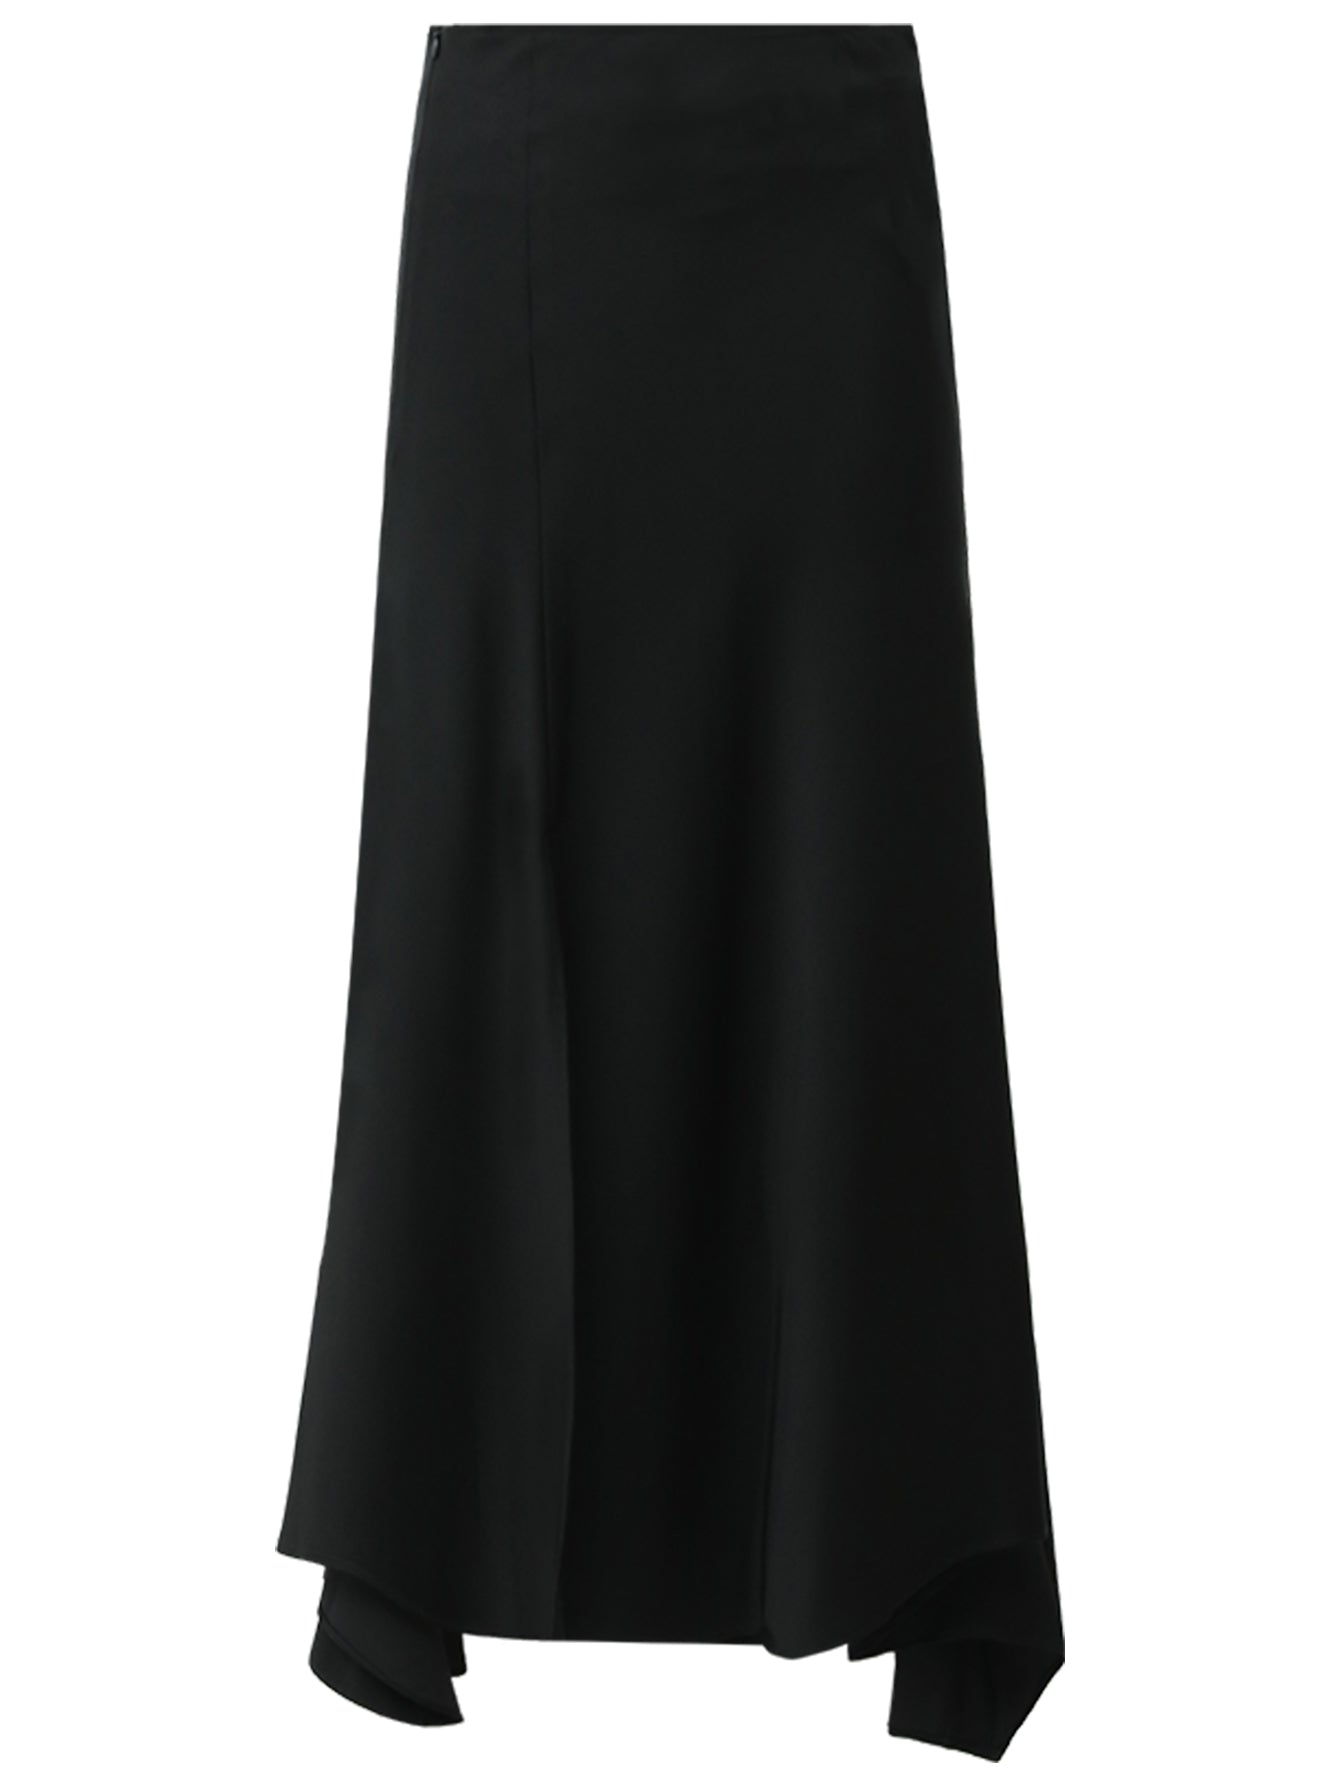 black-draped-mermaid-skirt-with-subtle-front-slit_all_black_4.jpg